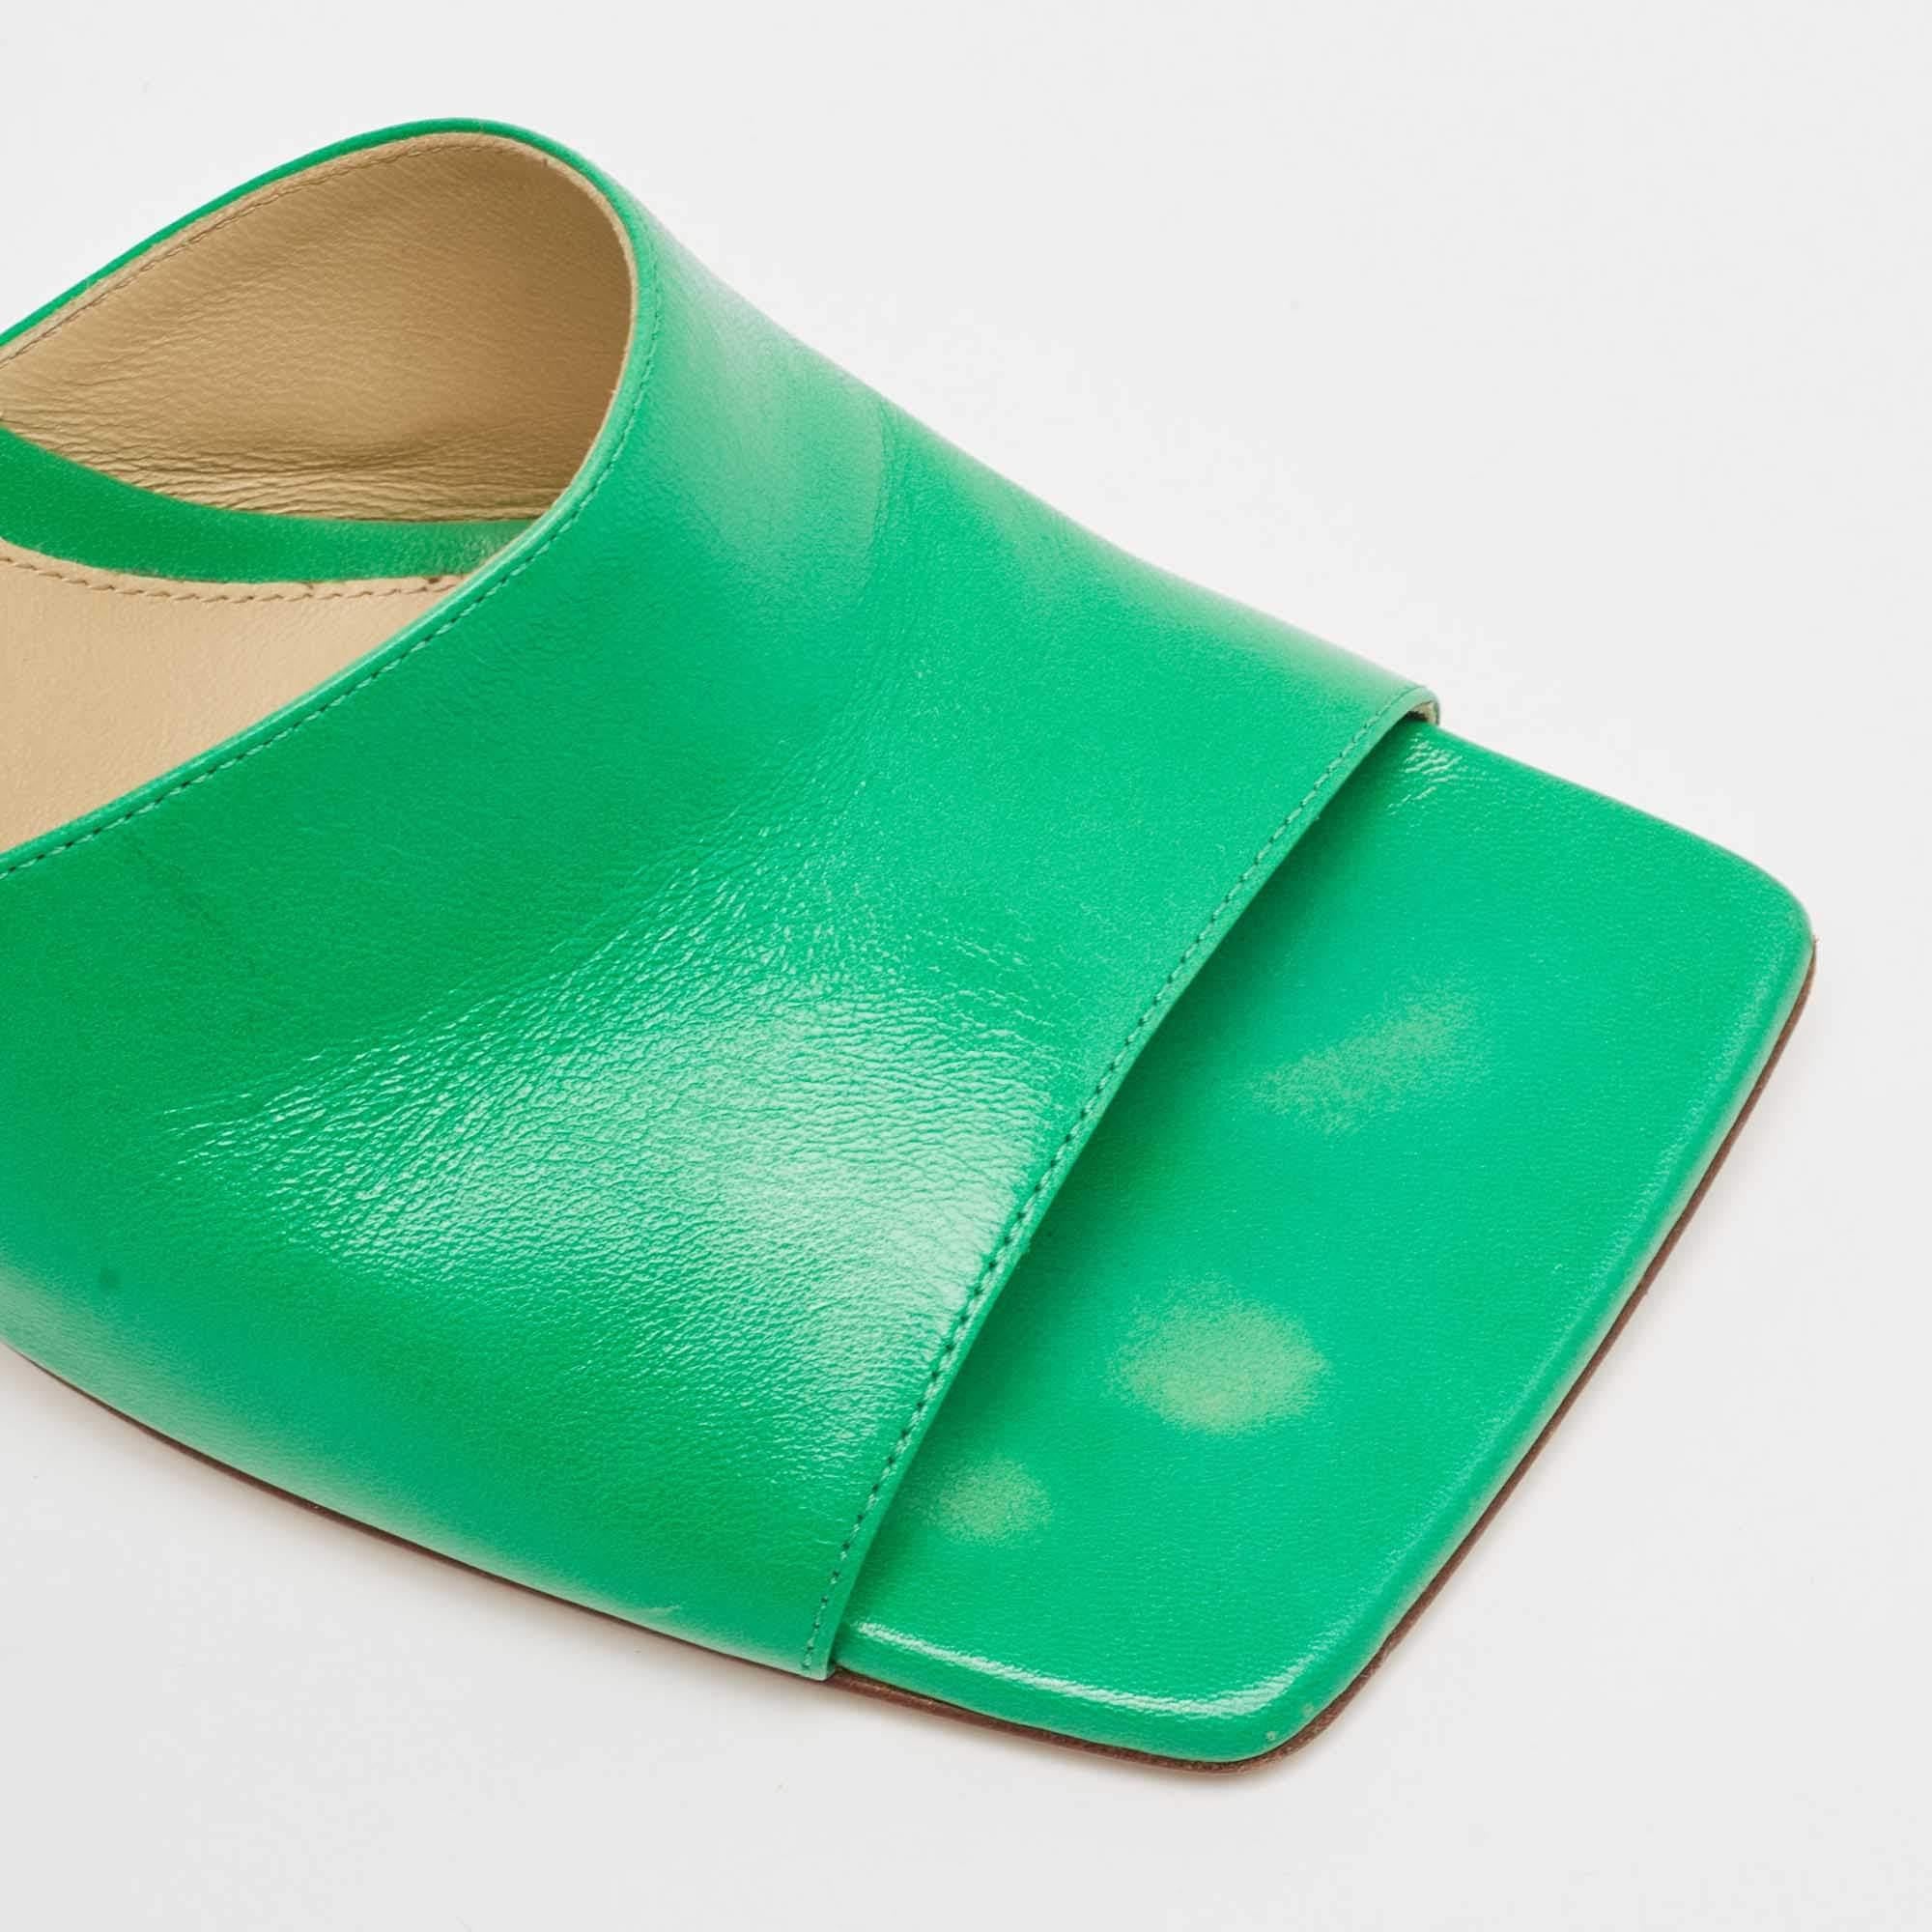 Bottega Veneta Green Leather Square Open Toe Slide Sandals Size 38 For Sale 1